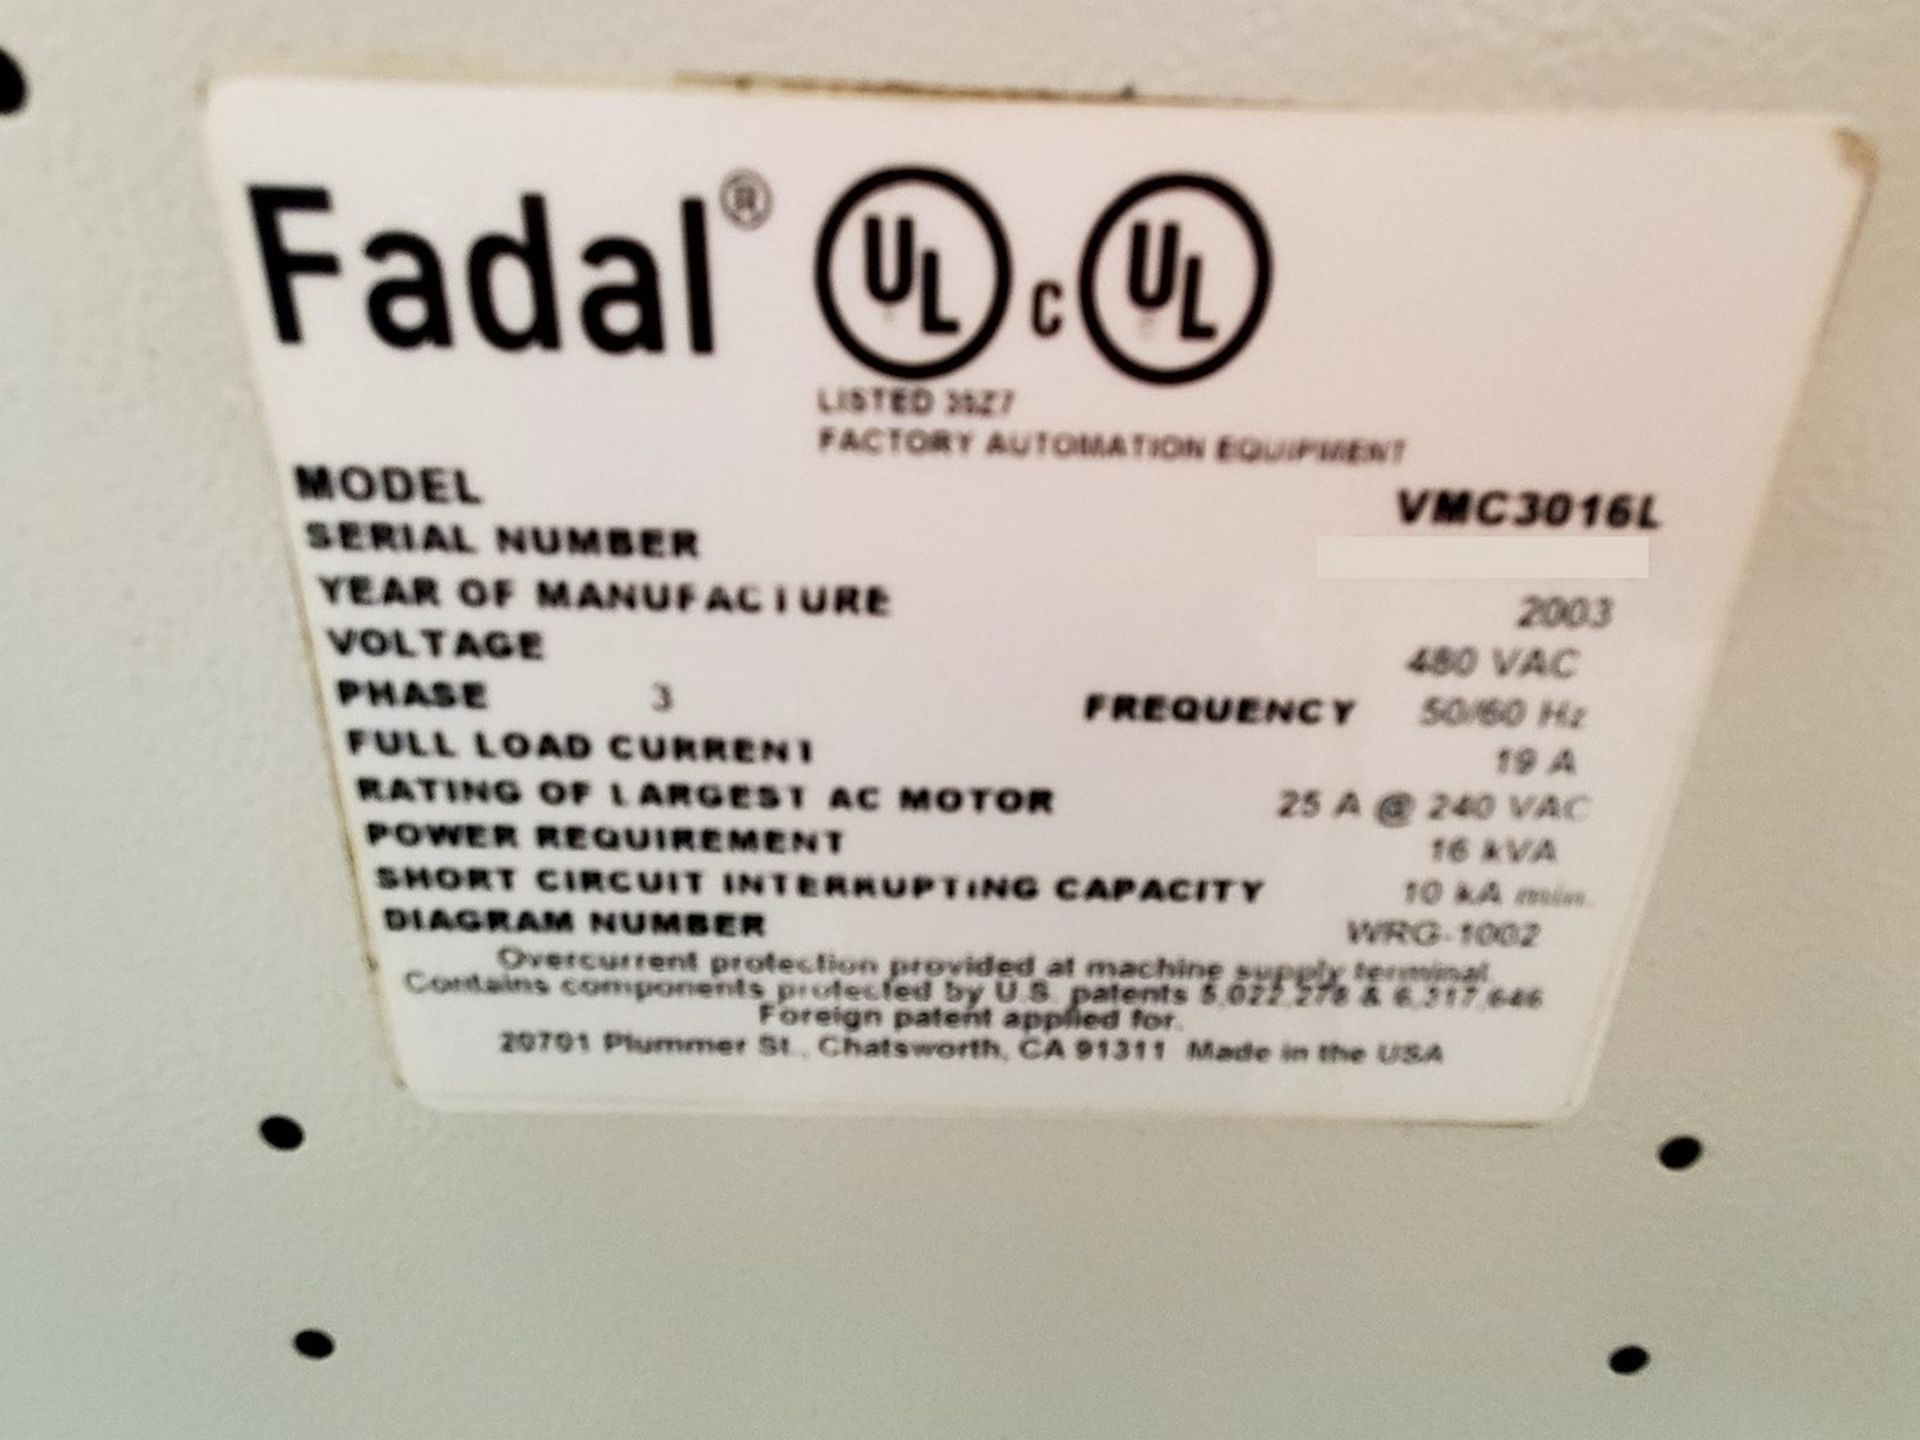 2003 Fadal VMC 3016L, CNC Vertical Machining Center - Image 10 of 10